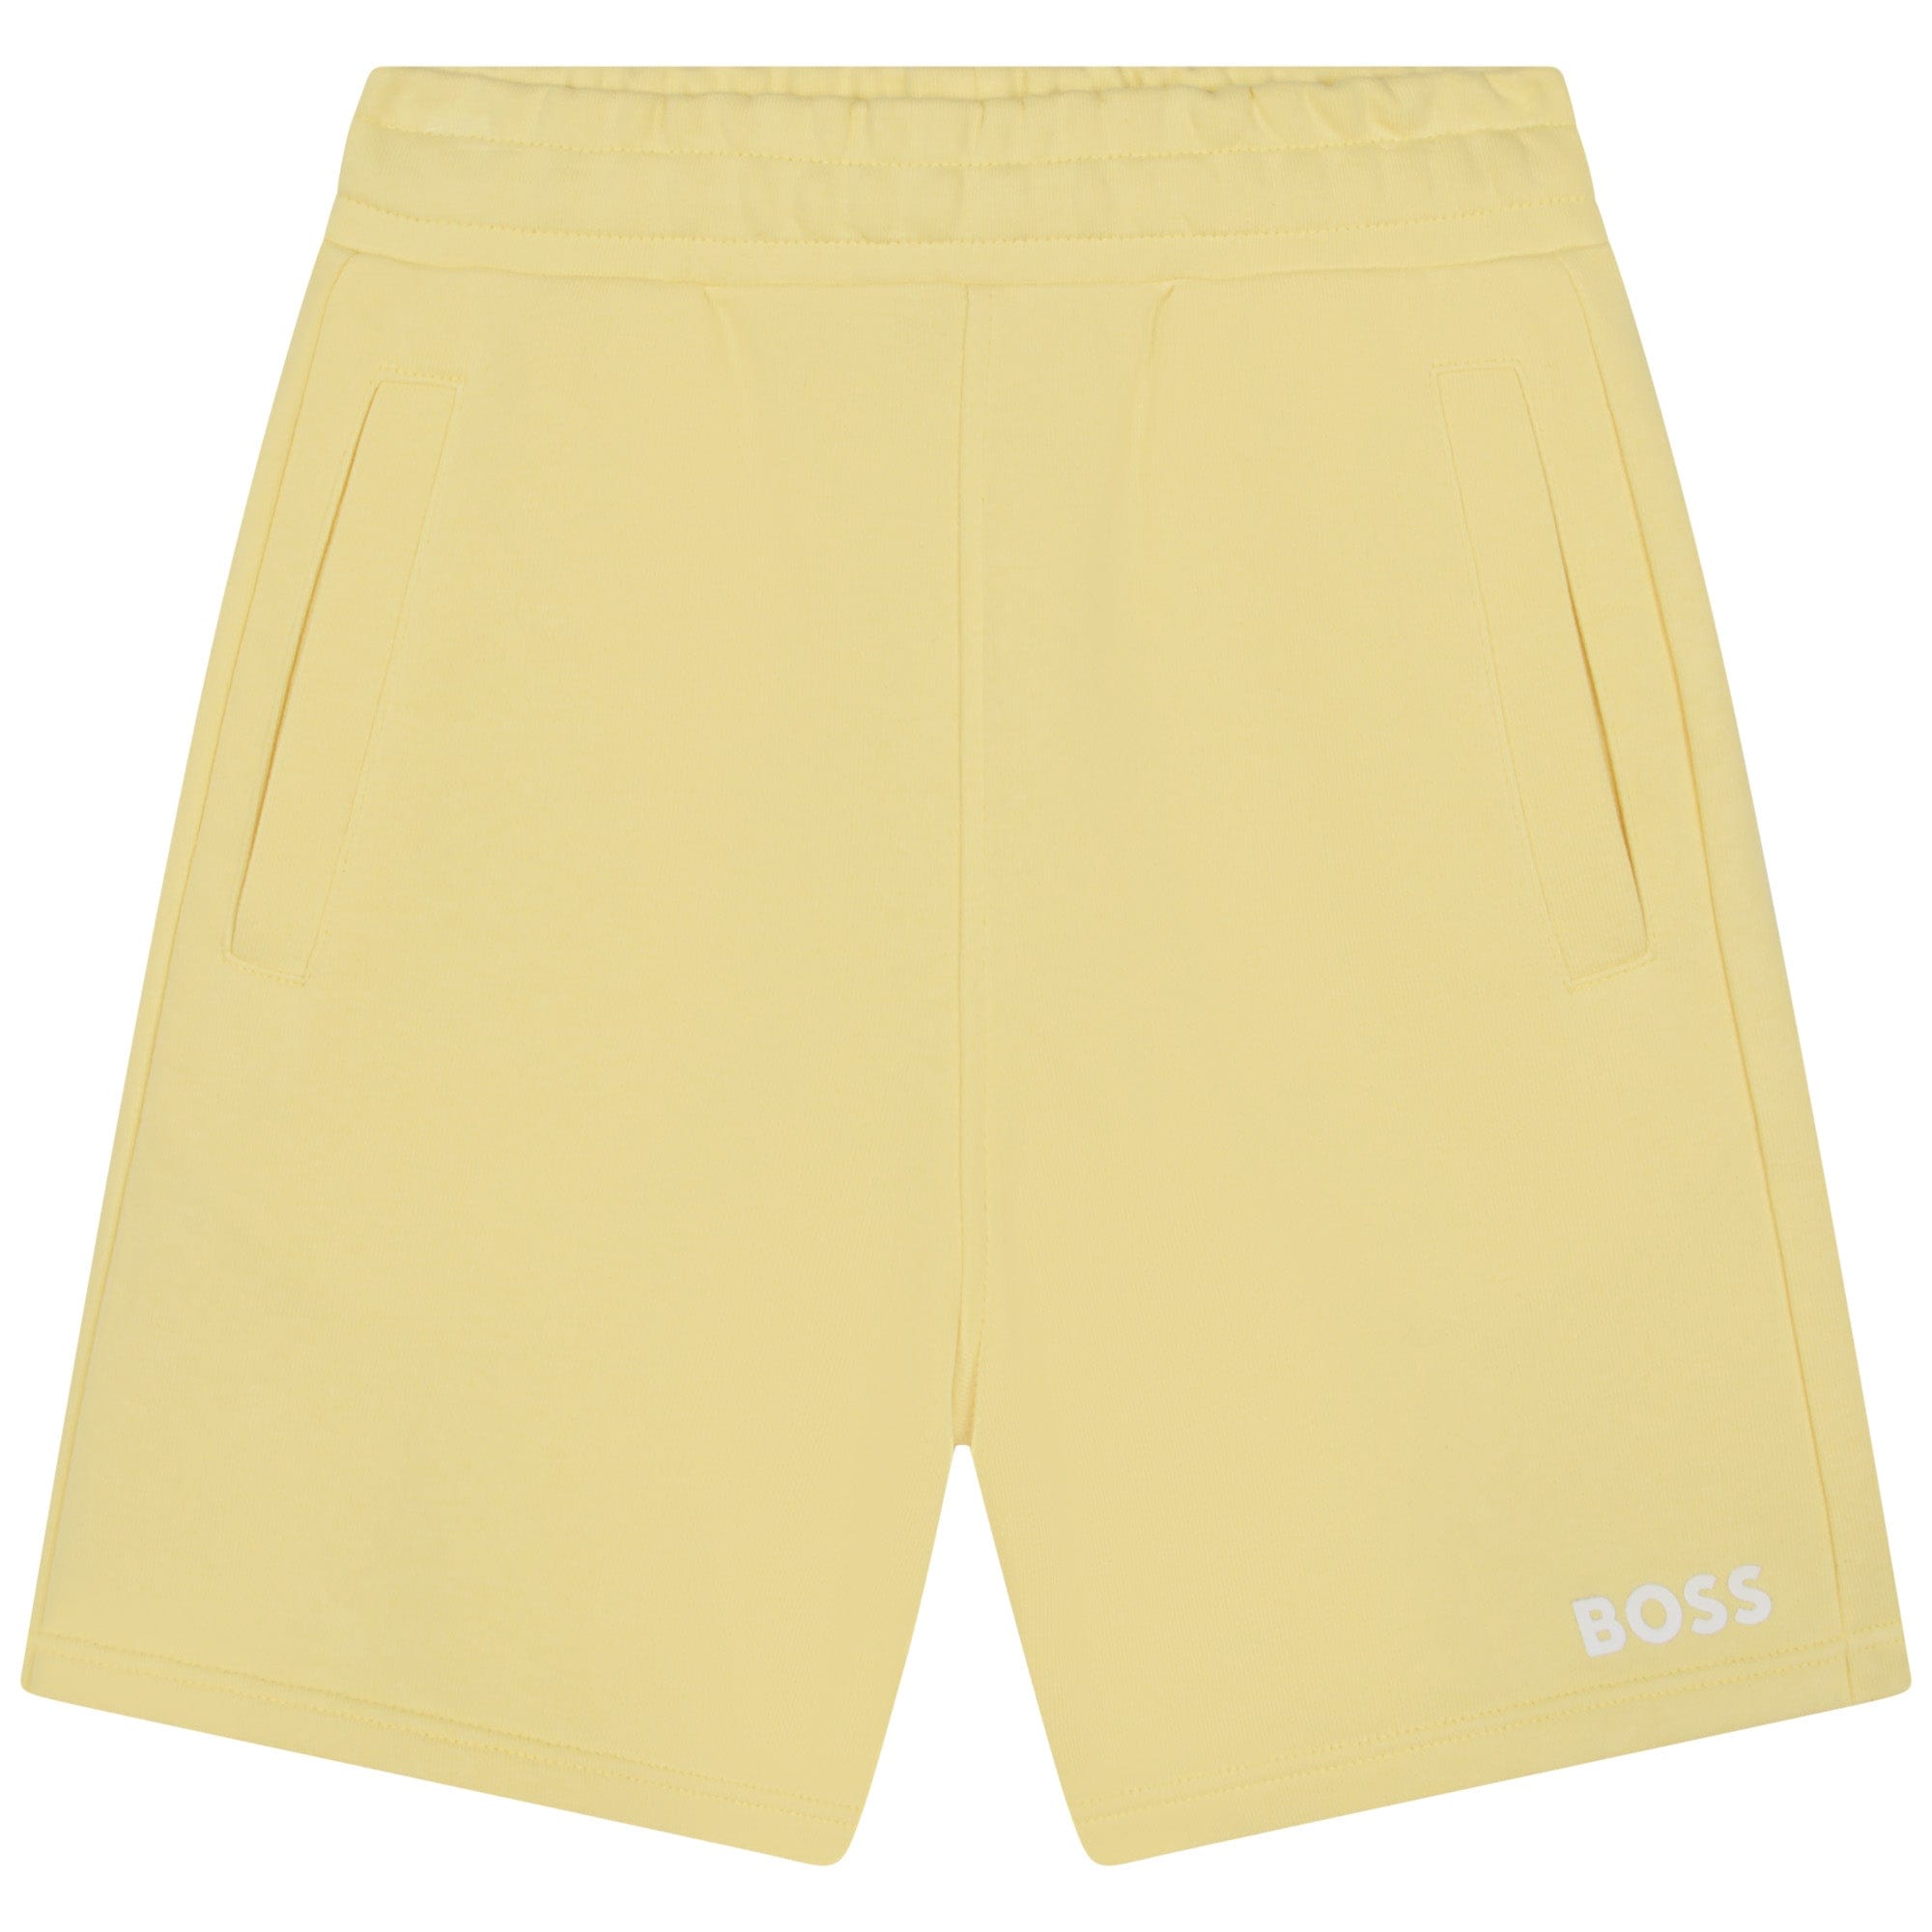 HUGO BOSS - Jersey Shorts - Yellow